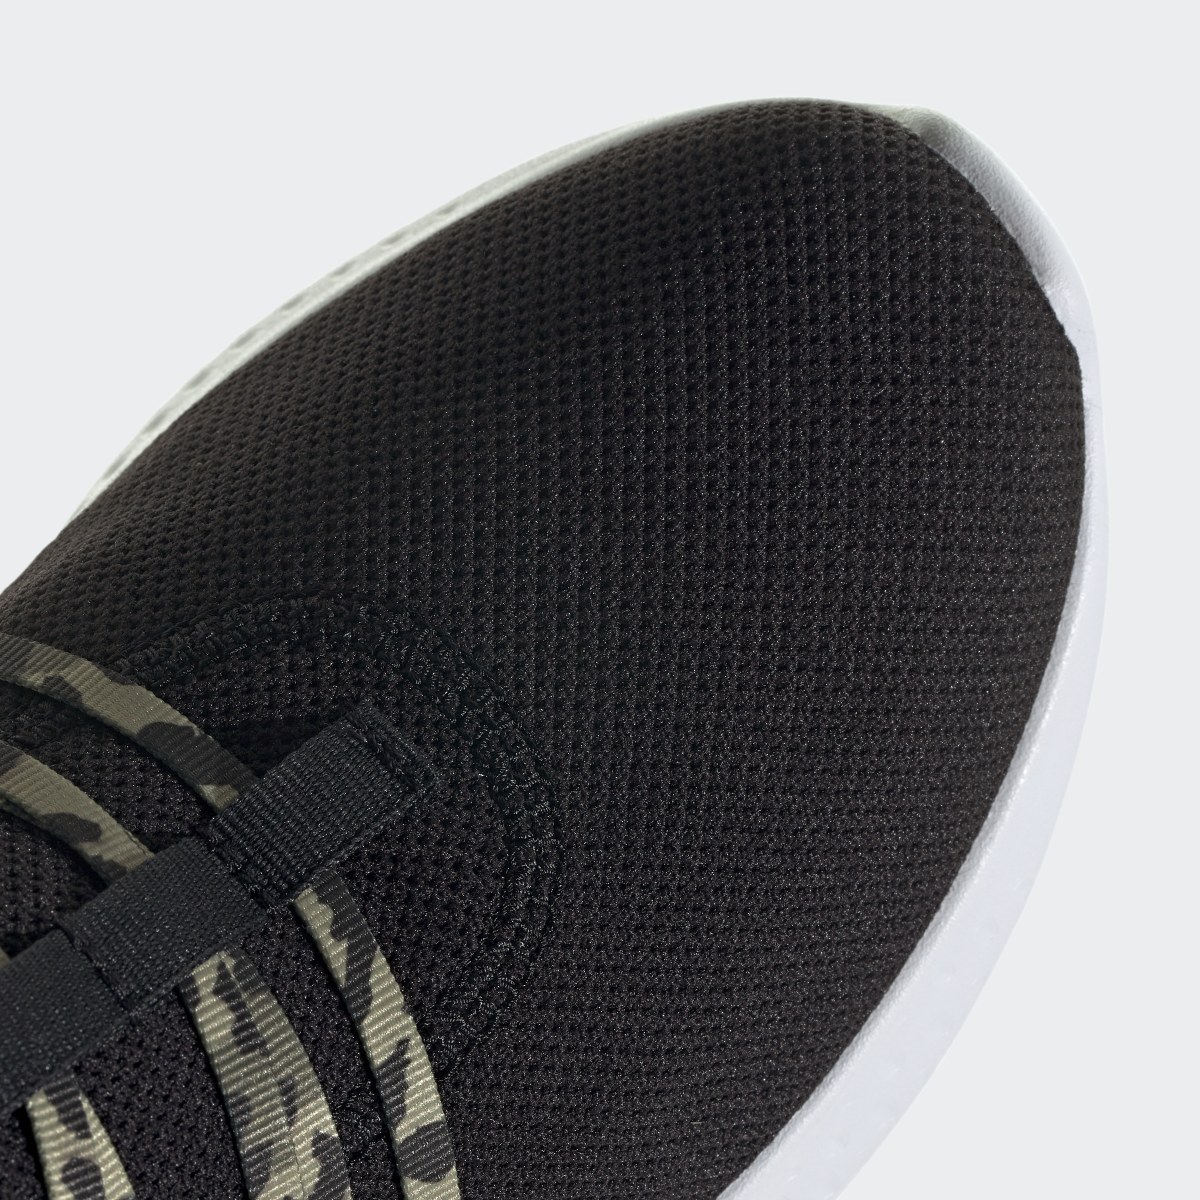 Adidas Puremotion Adapt 2.0 Shoes. 9